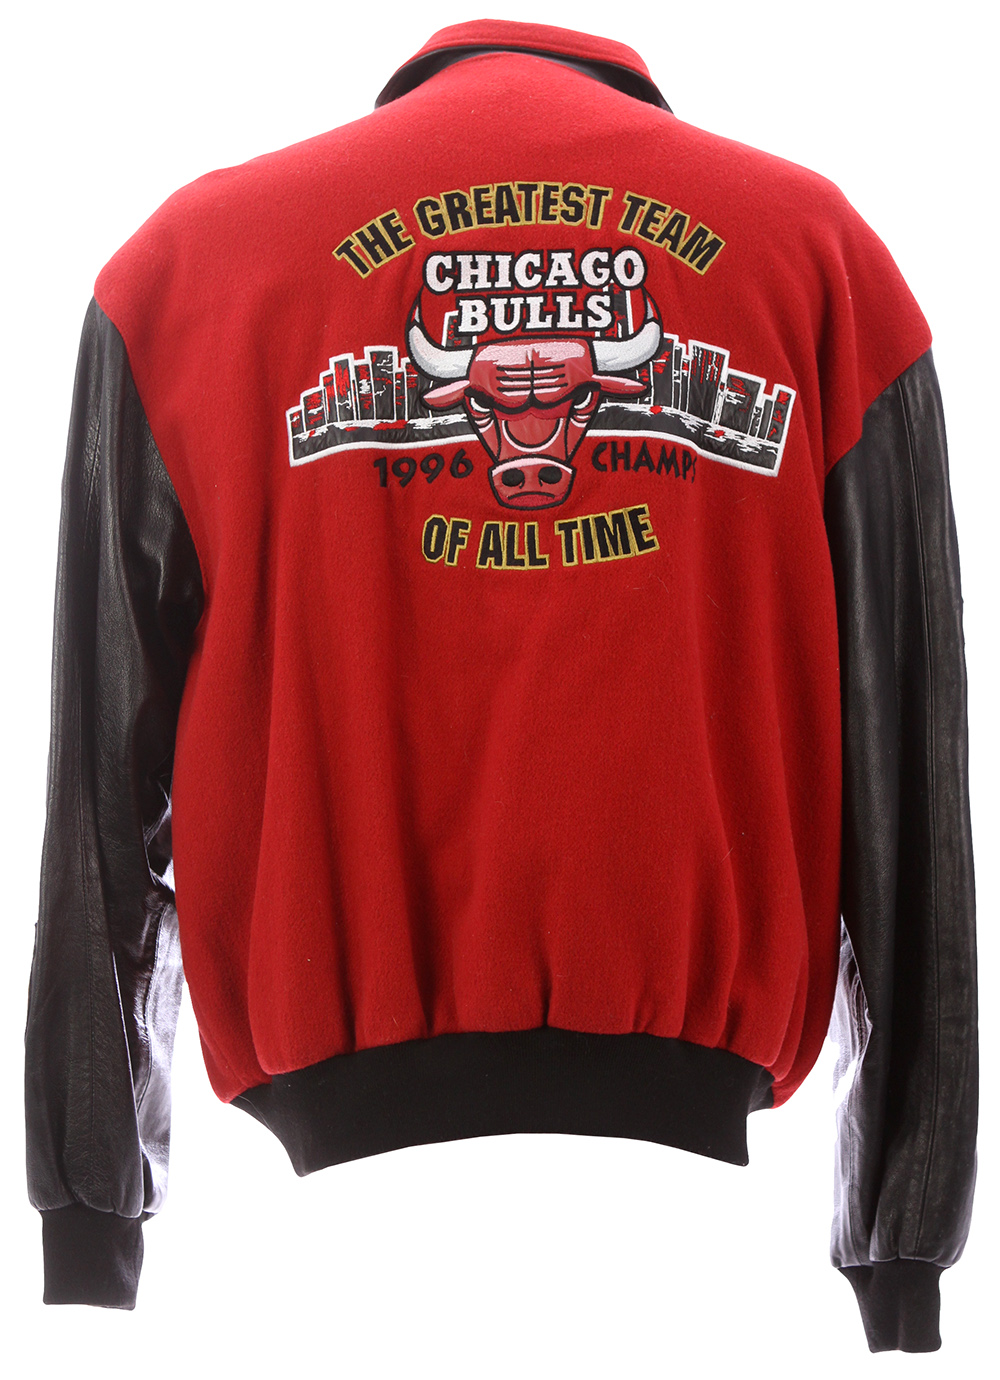 The greatest team ever 1996 nba champions chicago bulls shirt